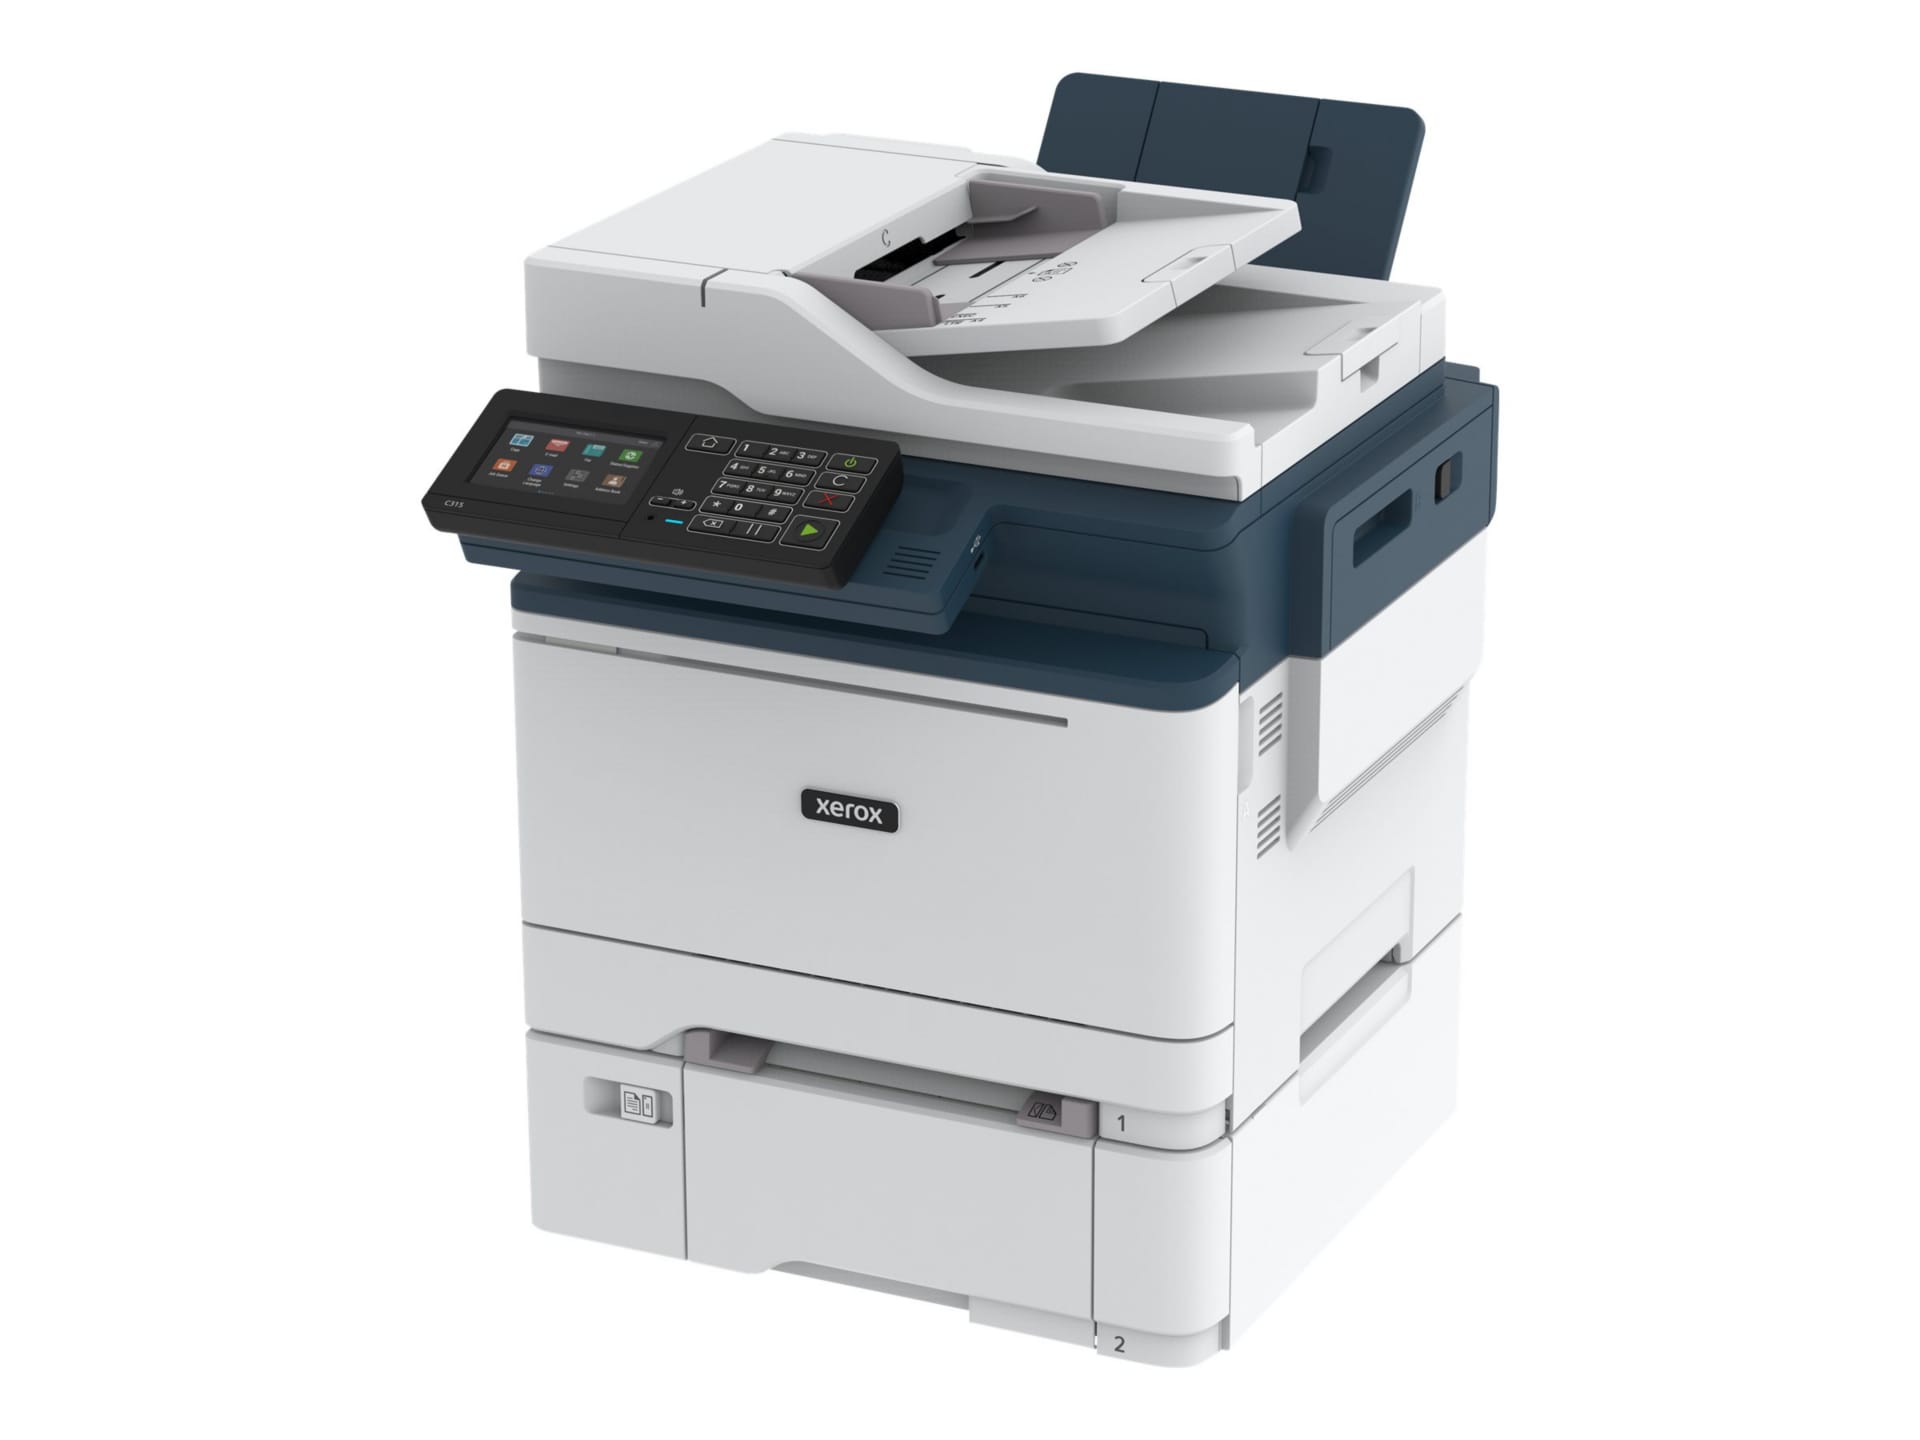 Xerox C315/DNI - multifunction printer - color